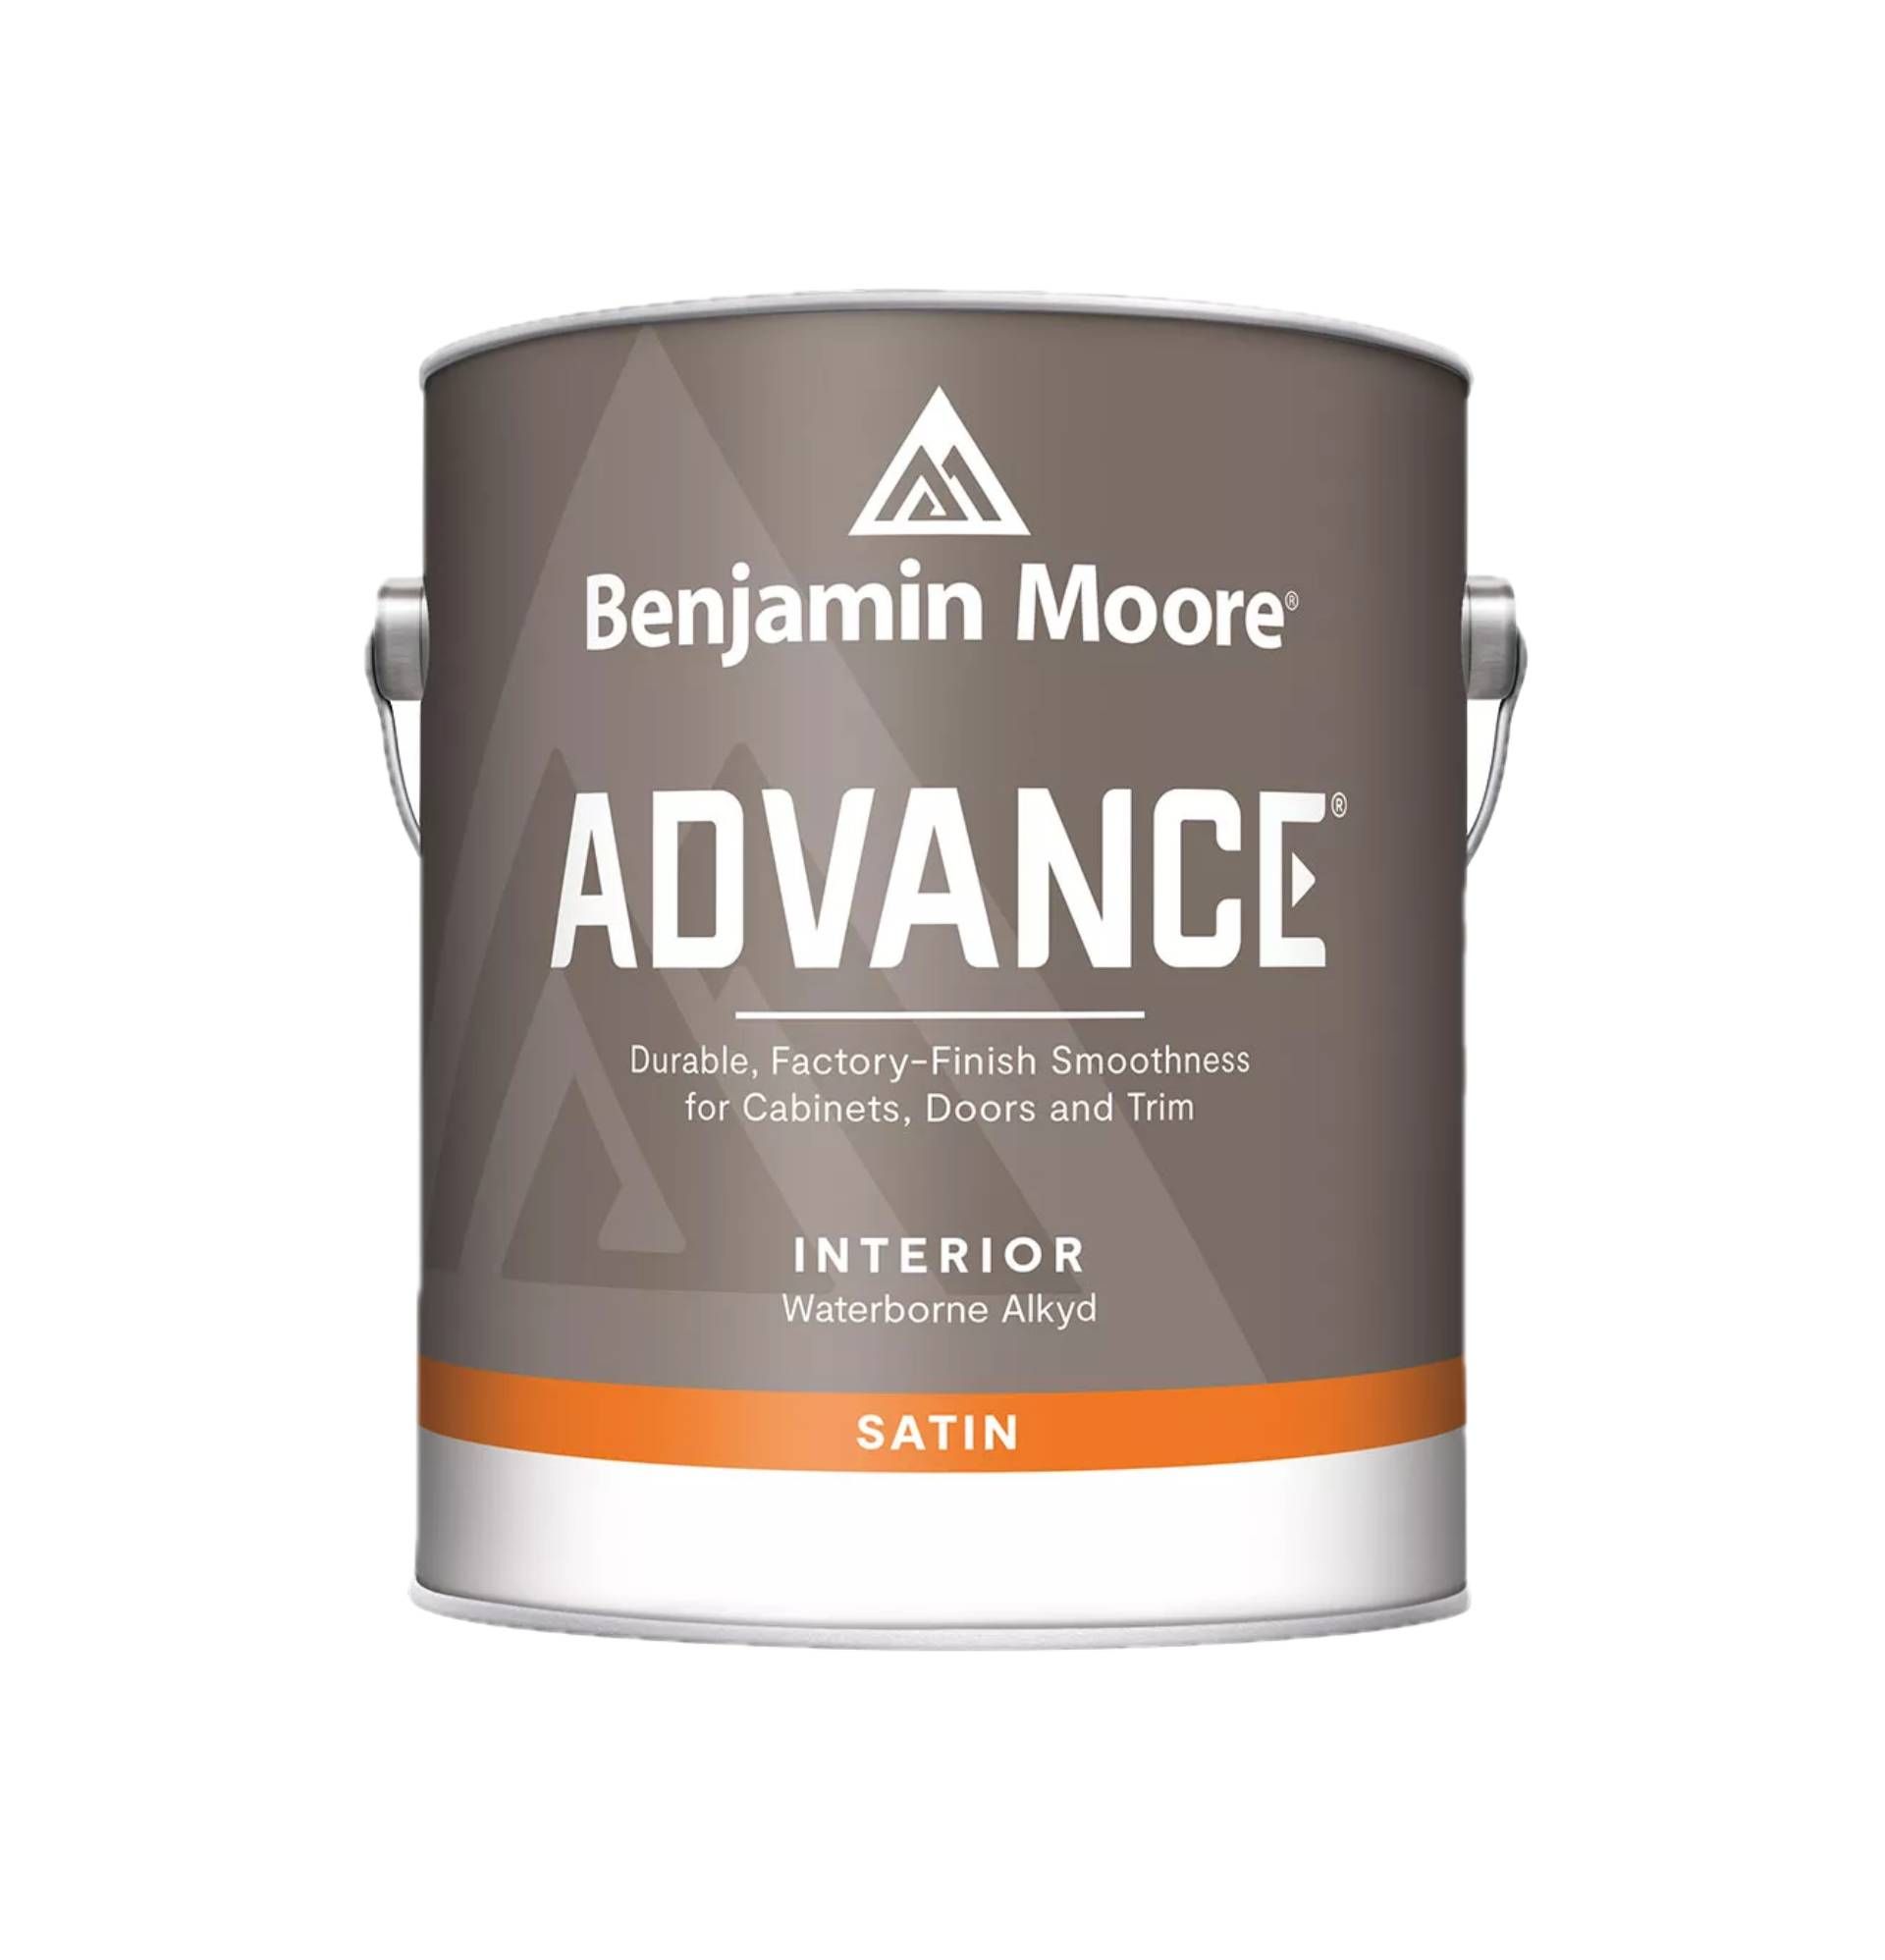 Benjamin Moore ADVANCE® Interior Paint near Fort Lauderdale, Florida (FL)